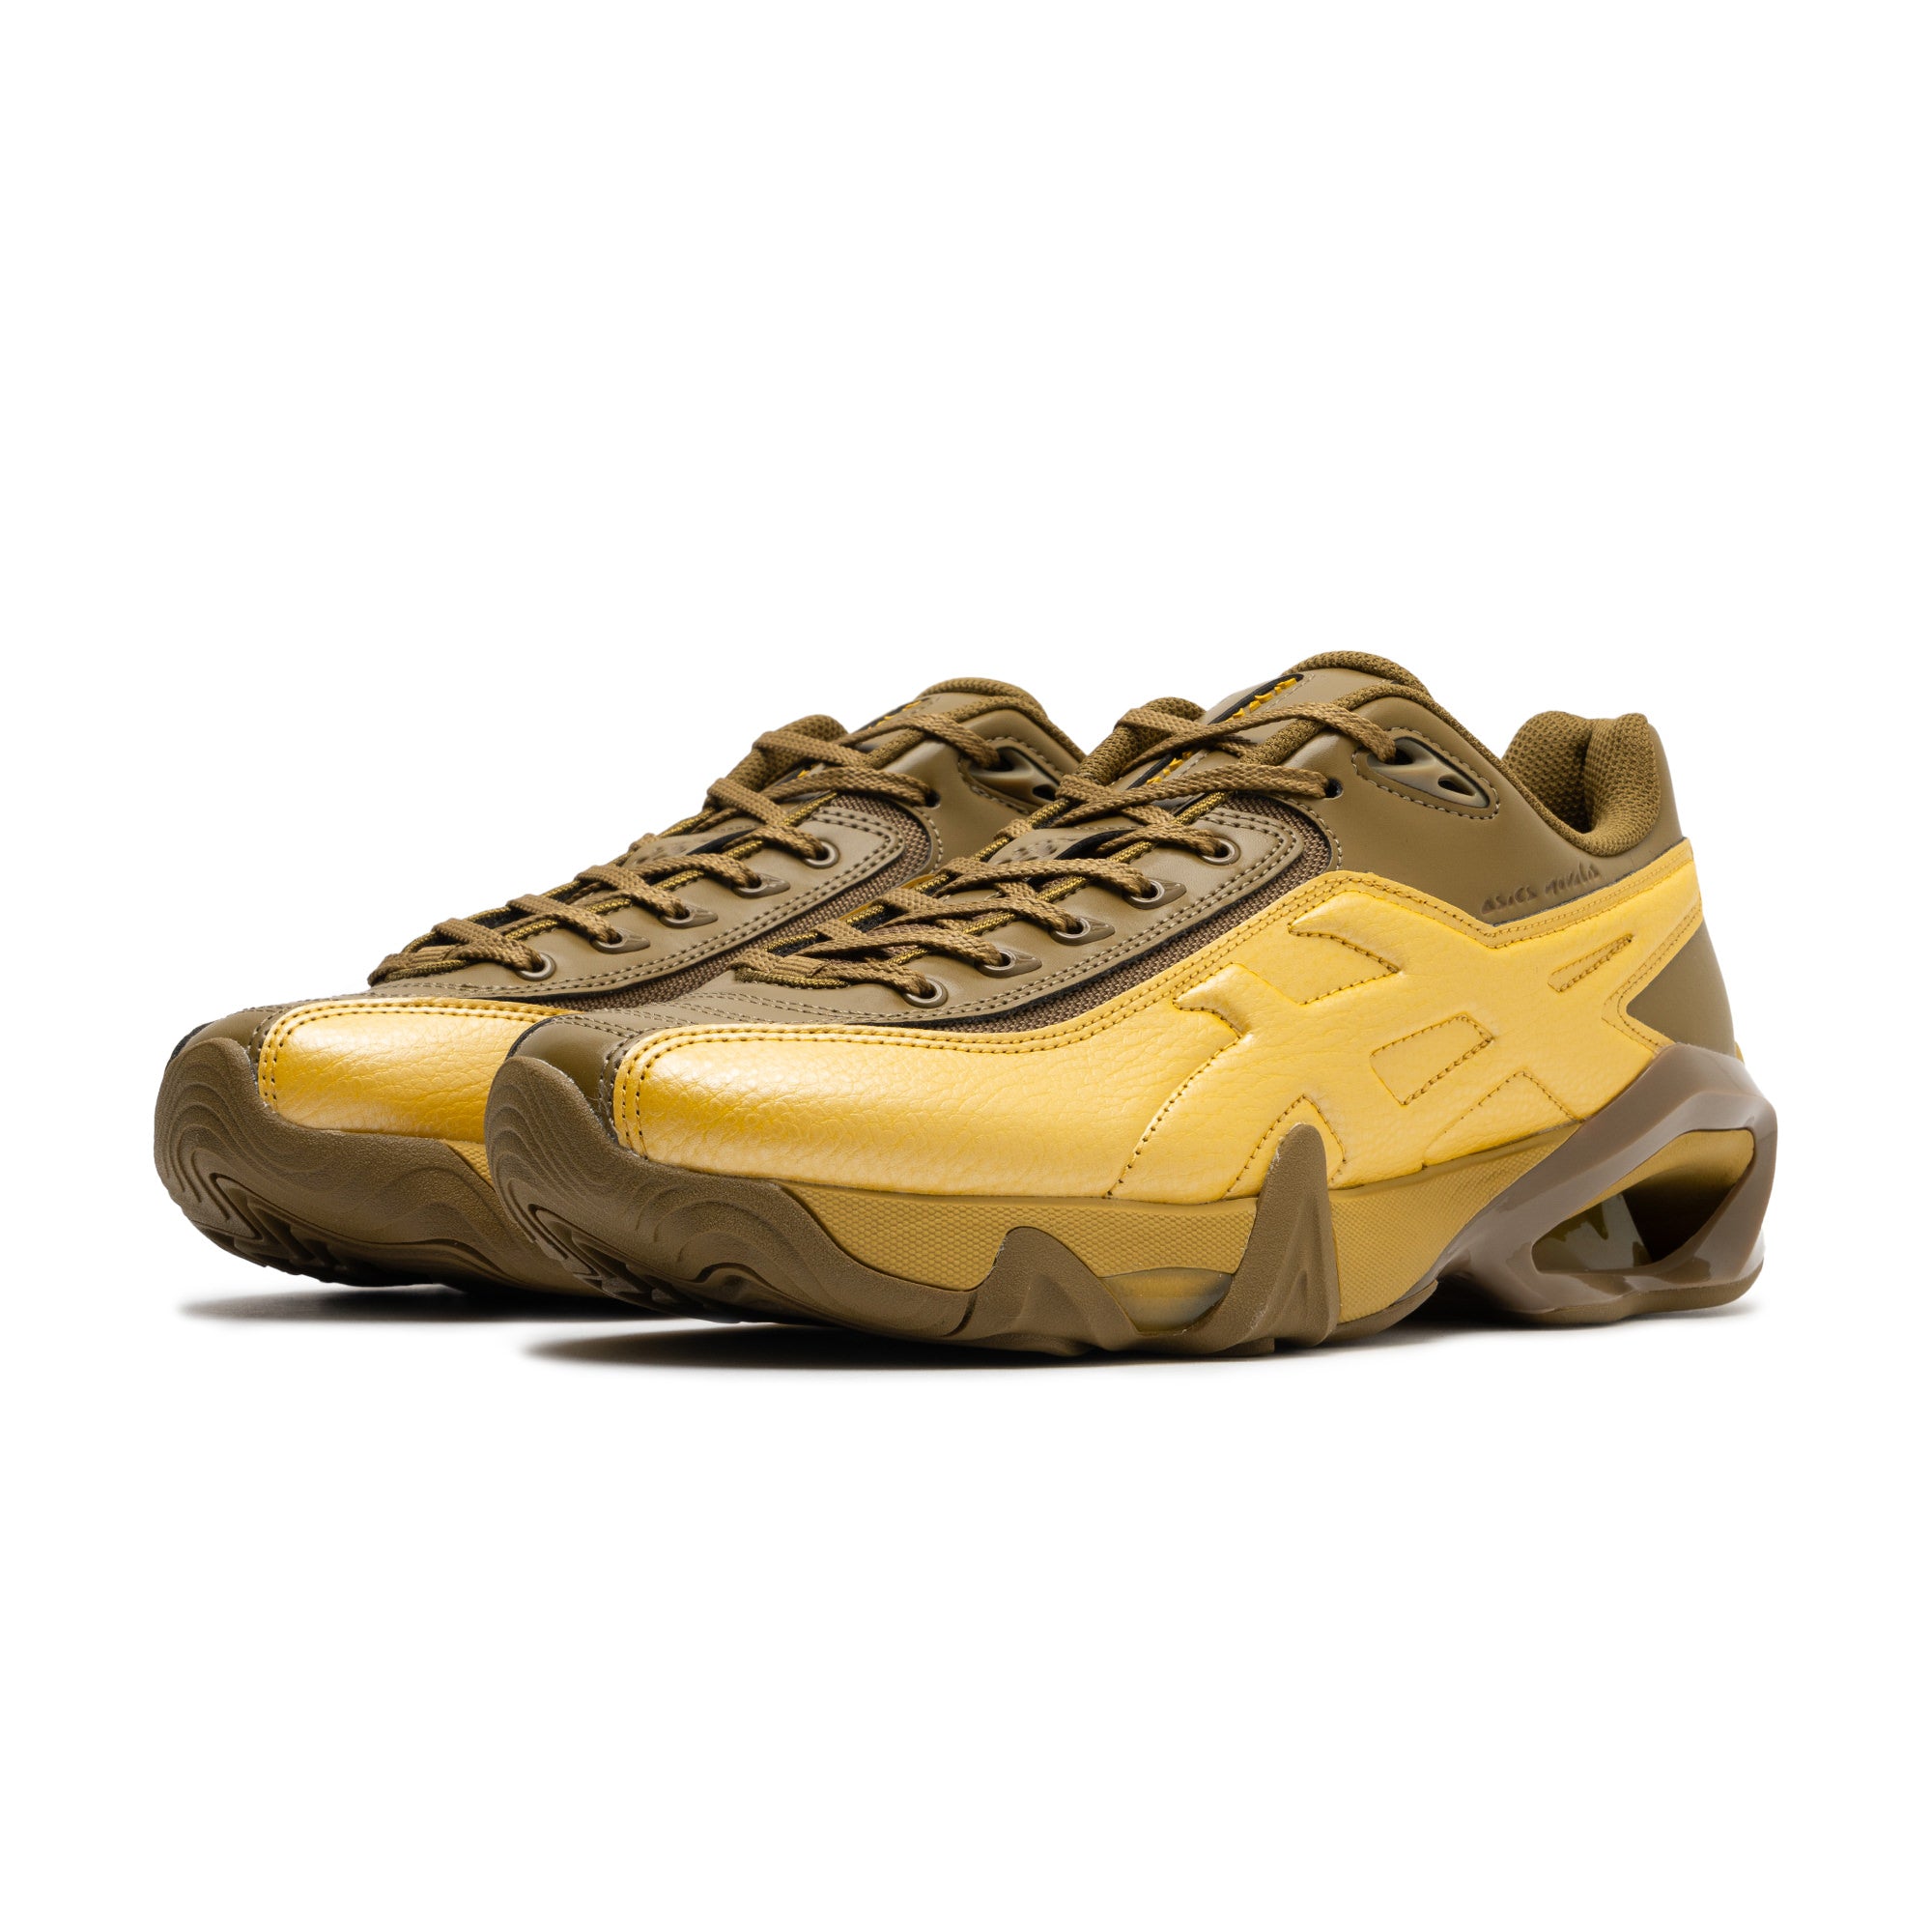 Asics Evoride 2 Marathon Running Shoes Sneakers 1012A891-402